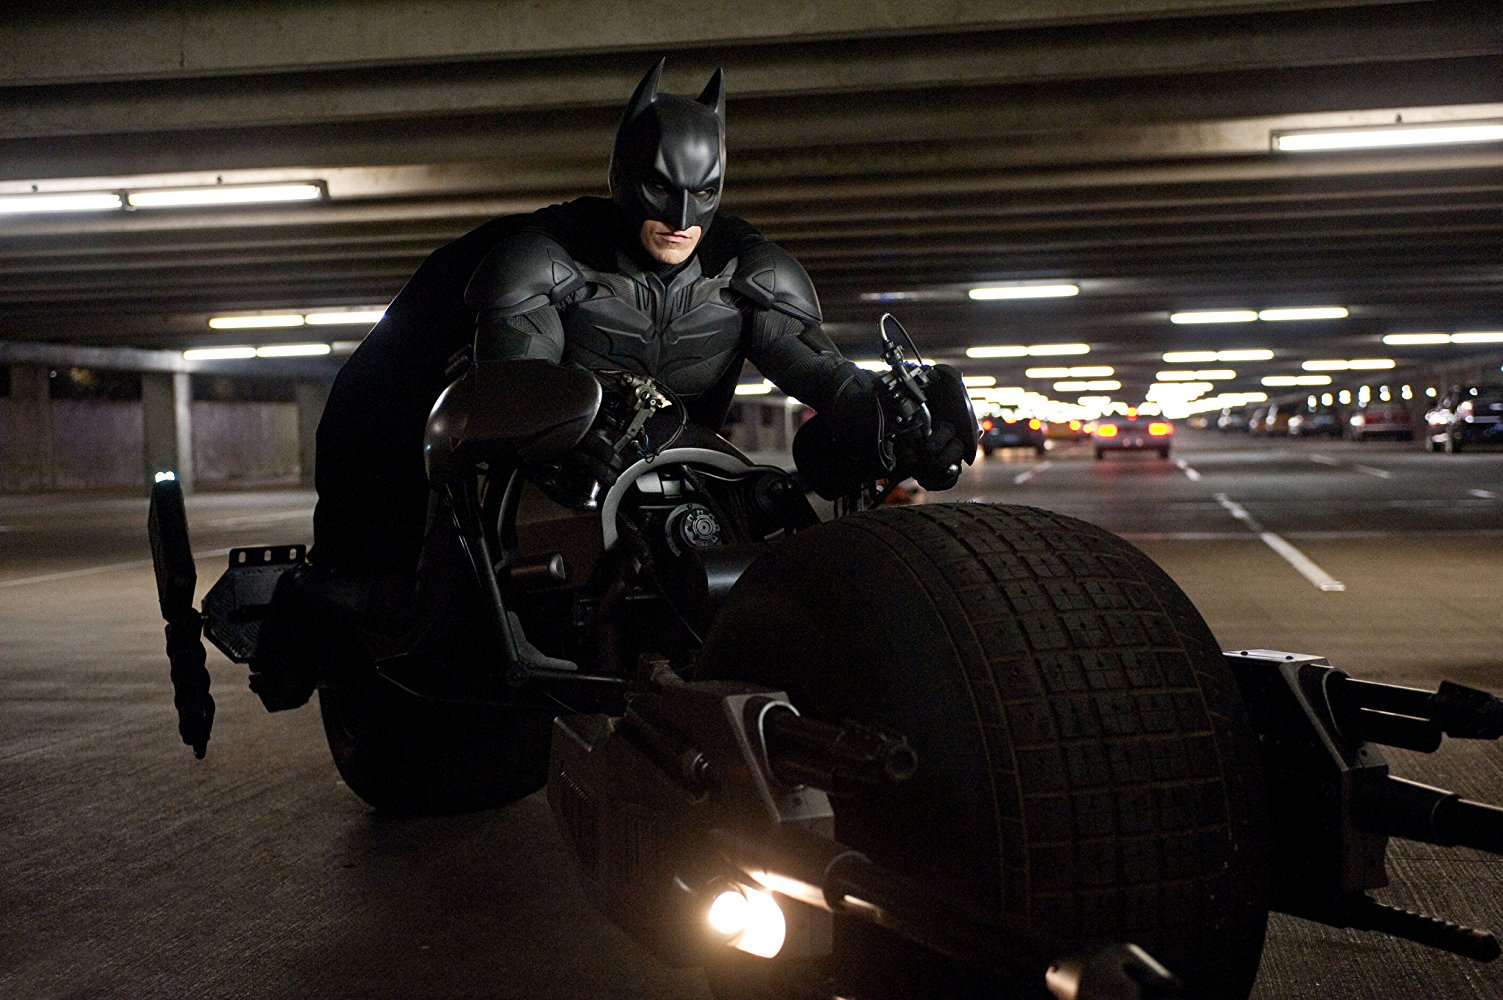 Batman (Christian Bale) on the Batbike in The Dark Knight Rises (2012)